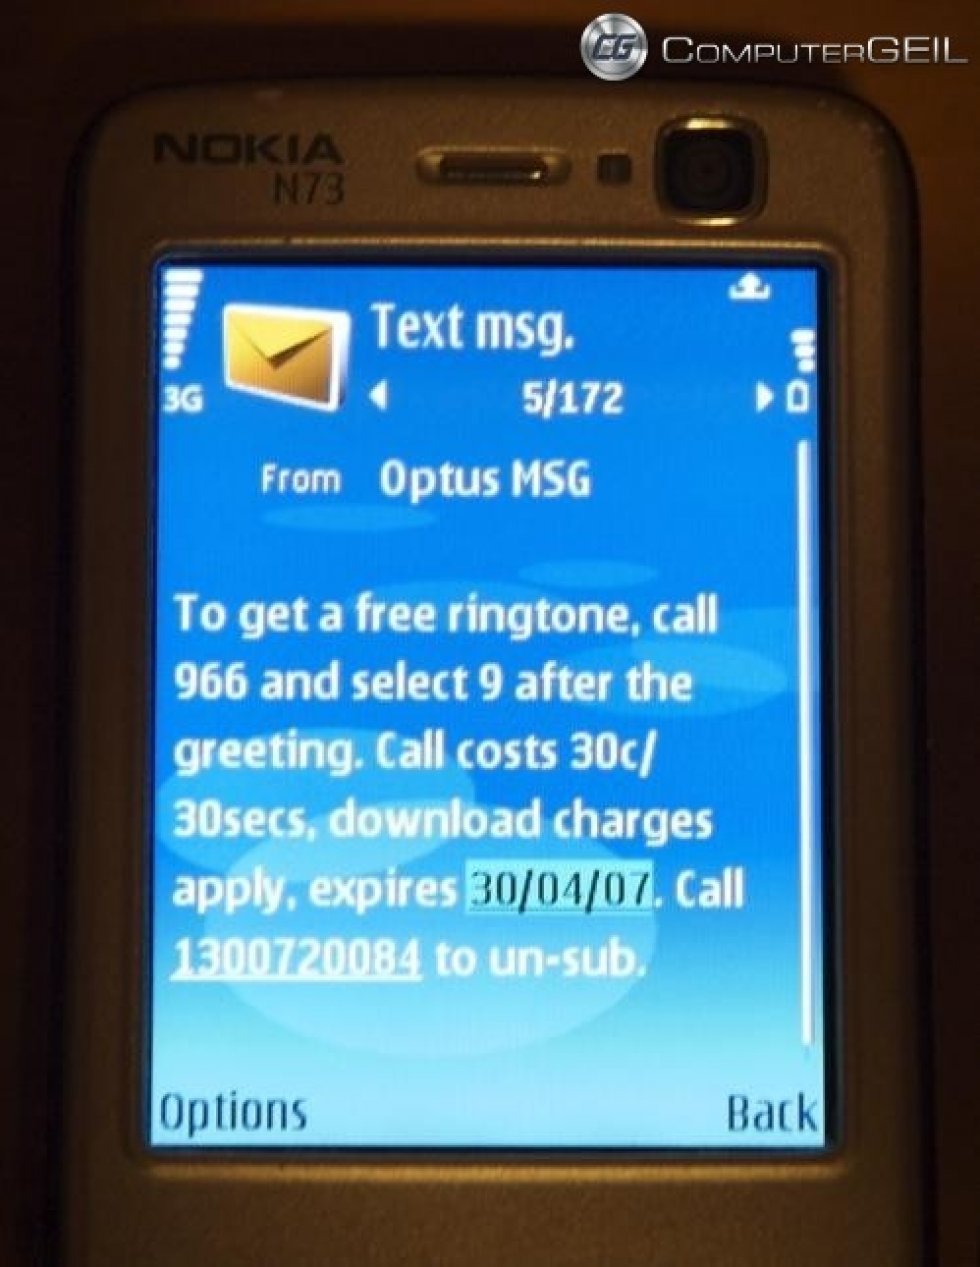 EU Regler for SMS priser på vej